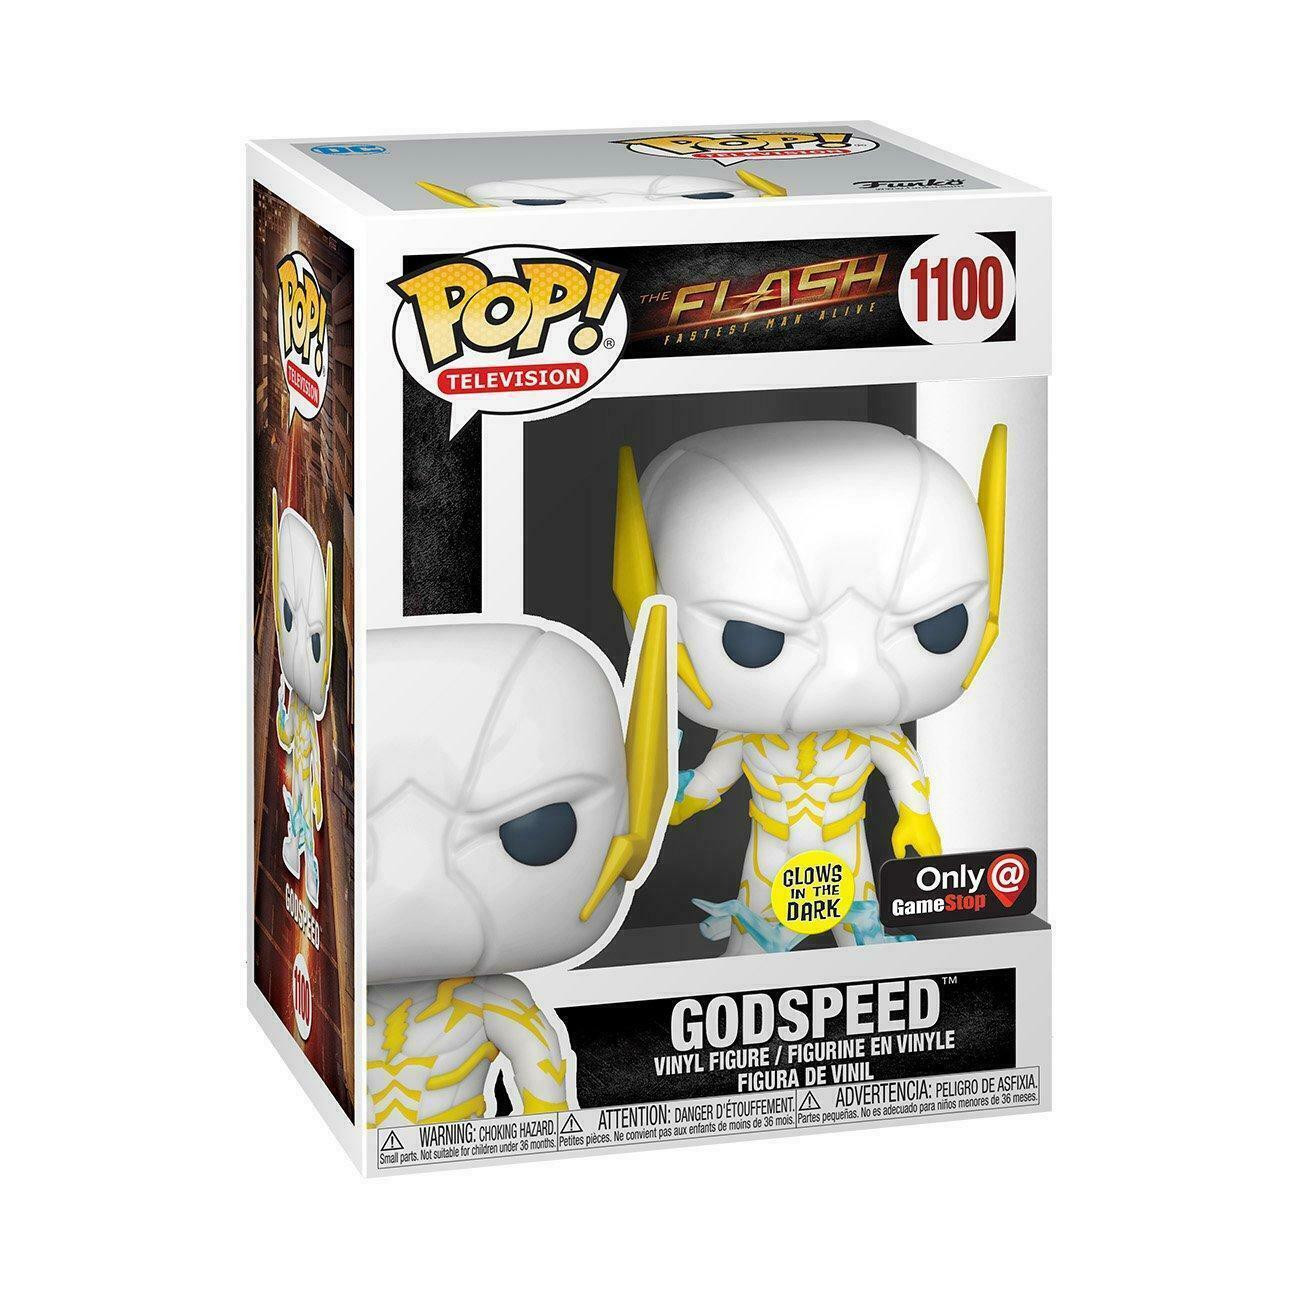 Godspeed (Glow in the Dark) #1100 Funko Pop! The Flash, GameStop Exclusive - Angry Cat